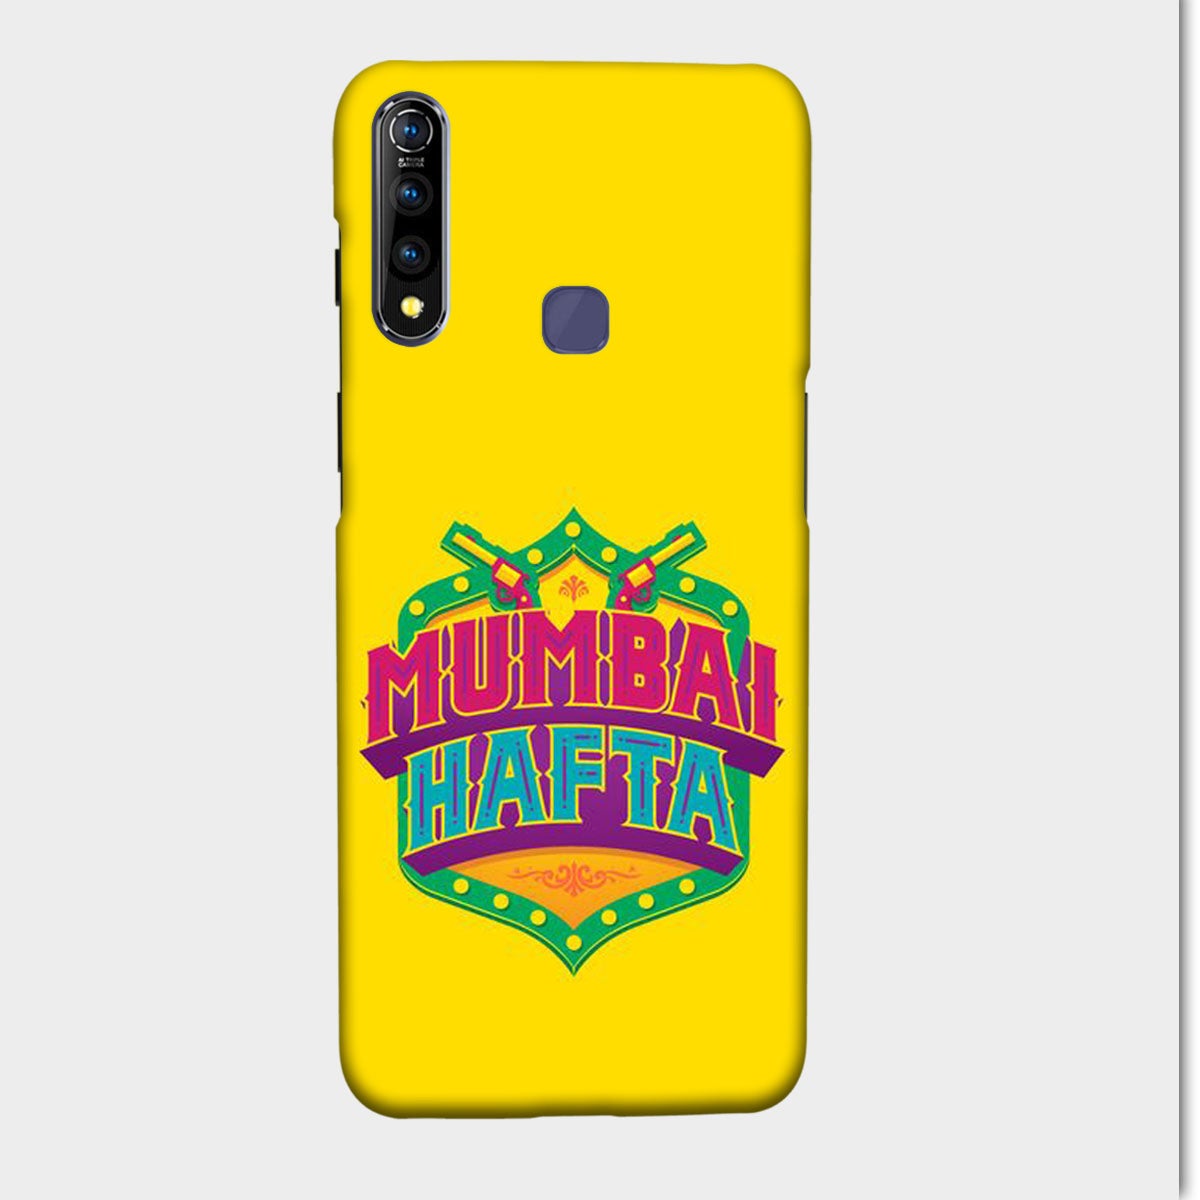 Mumbai Hafta - Mobile Phone Cover - Hard Case - Vivo